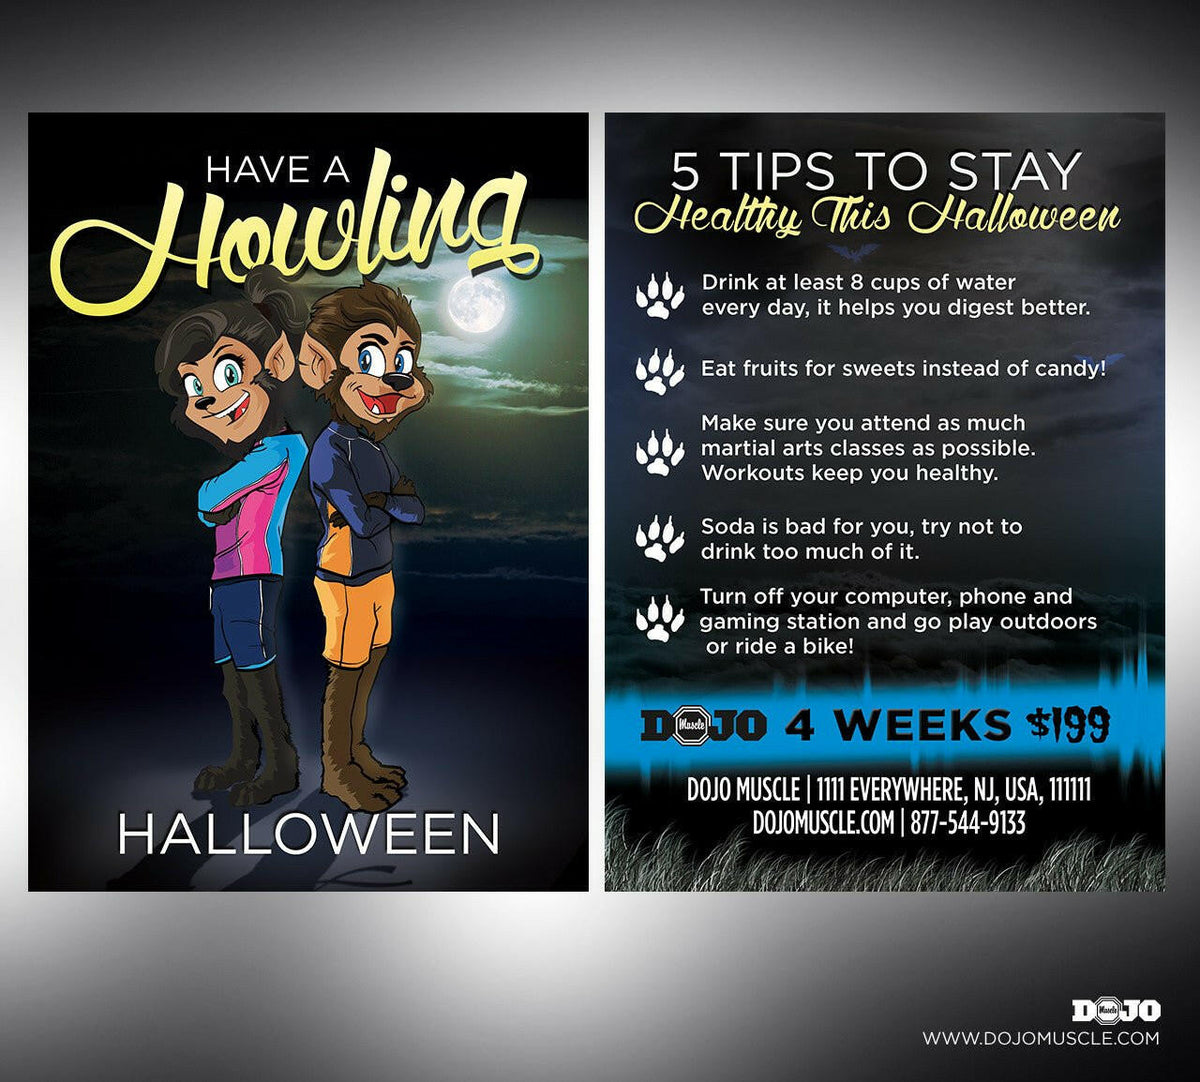 Howling Halloween - Tips Card B - Dojo Muscle